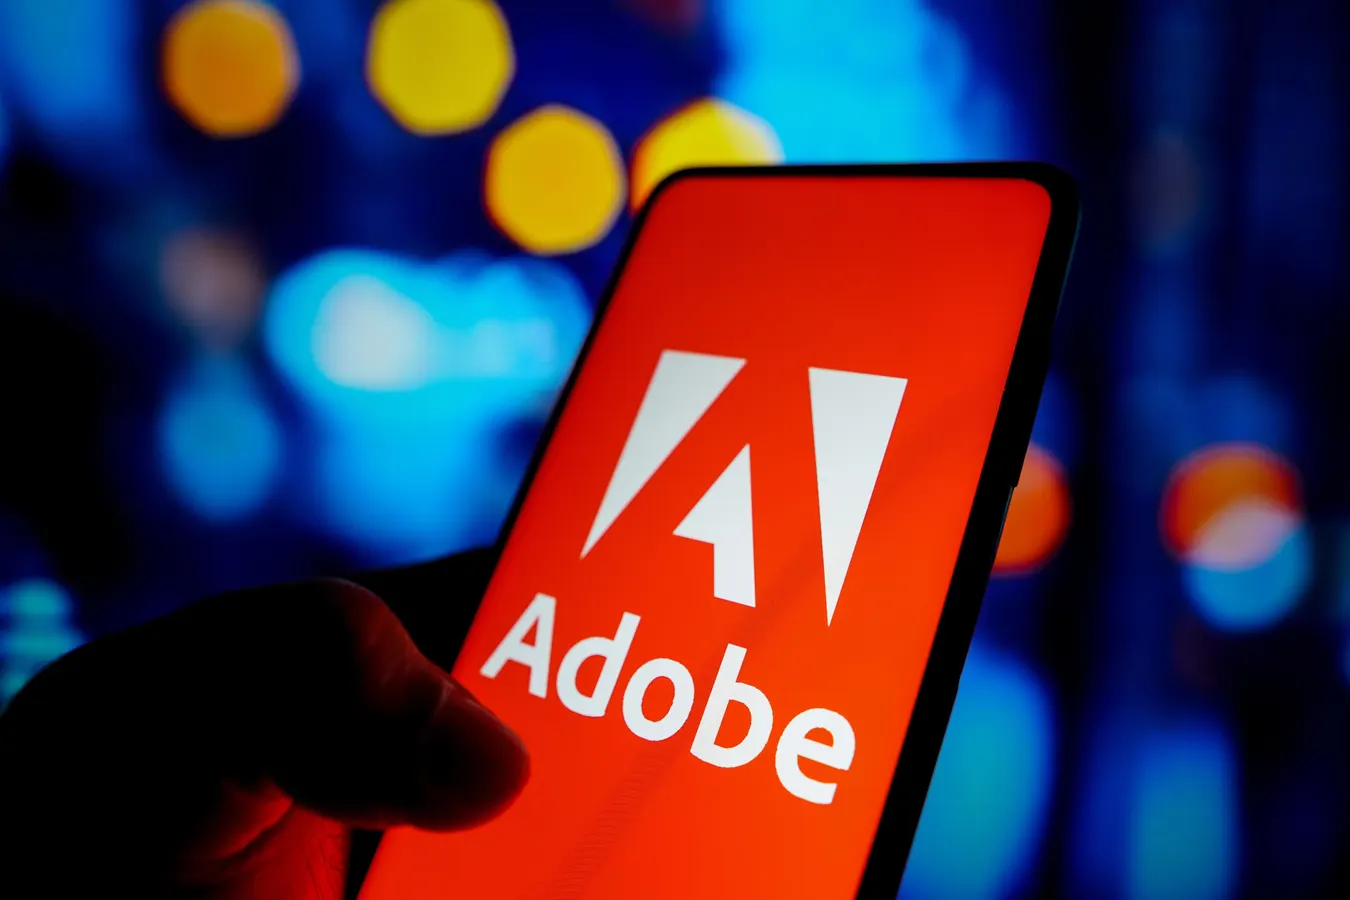 Adobe Integrates AI into Acrobat